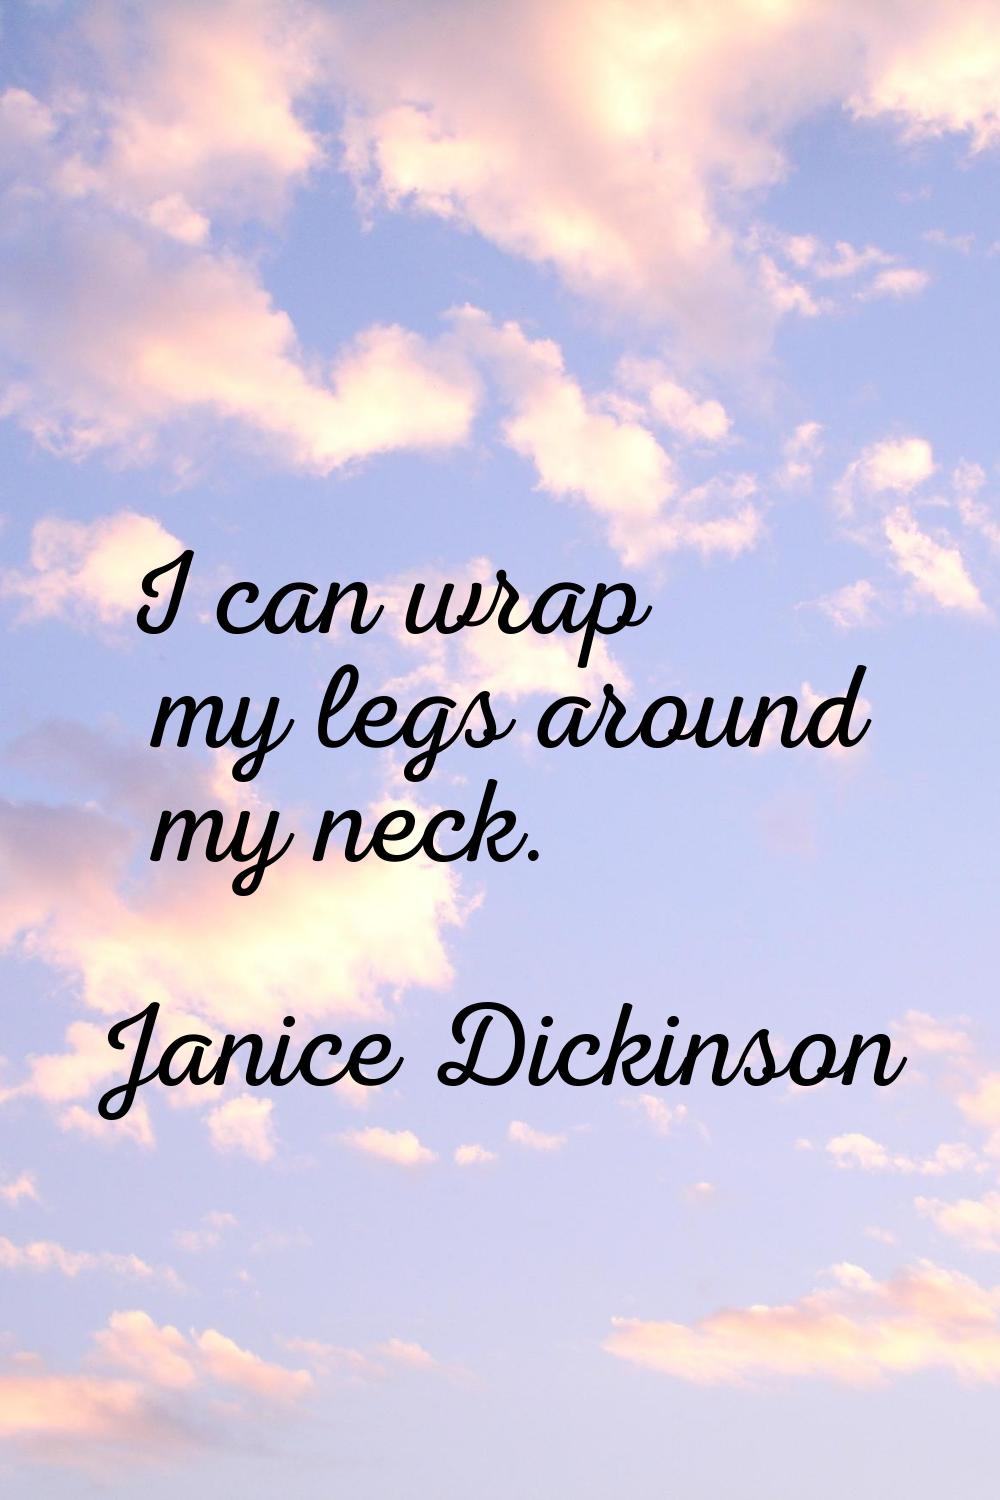 I can wrap my legs around my neck.